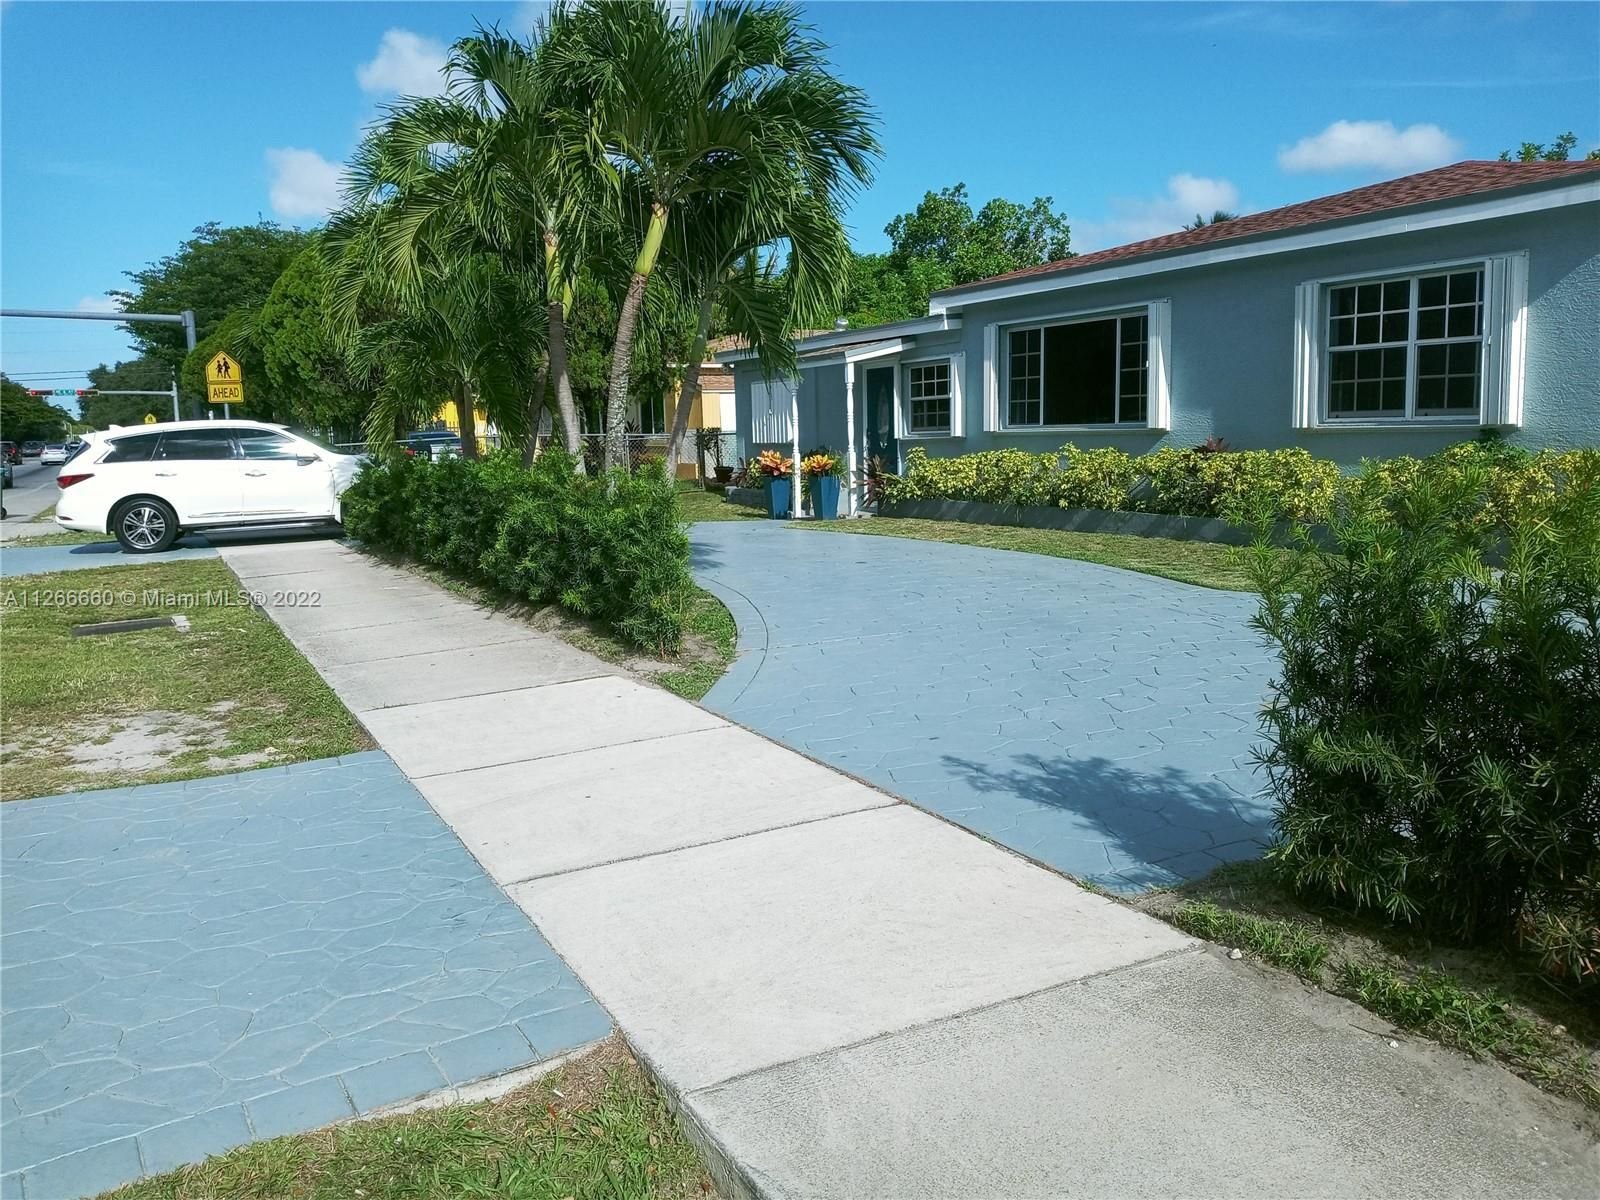 Real estate property located at 530 159th St, Miami-Dade County, Miami, FL